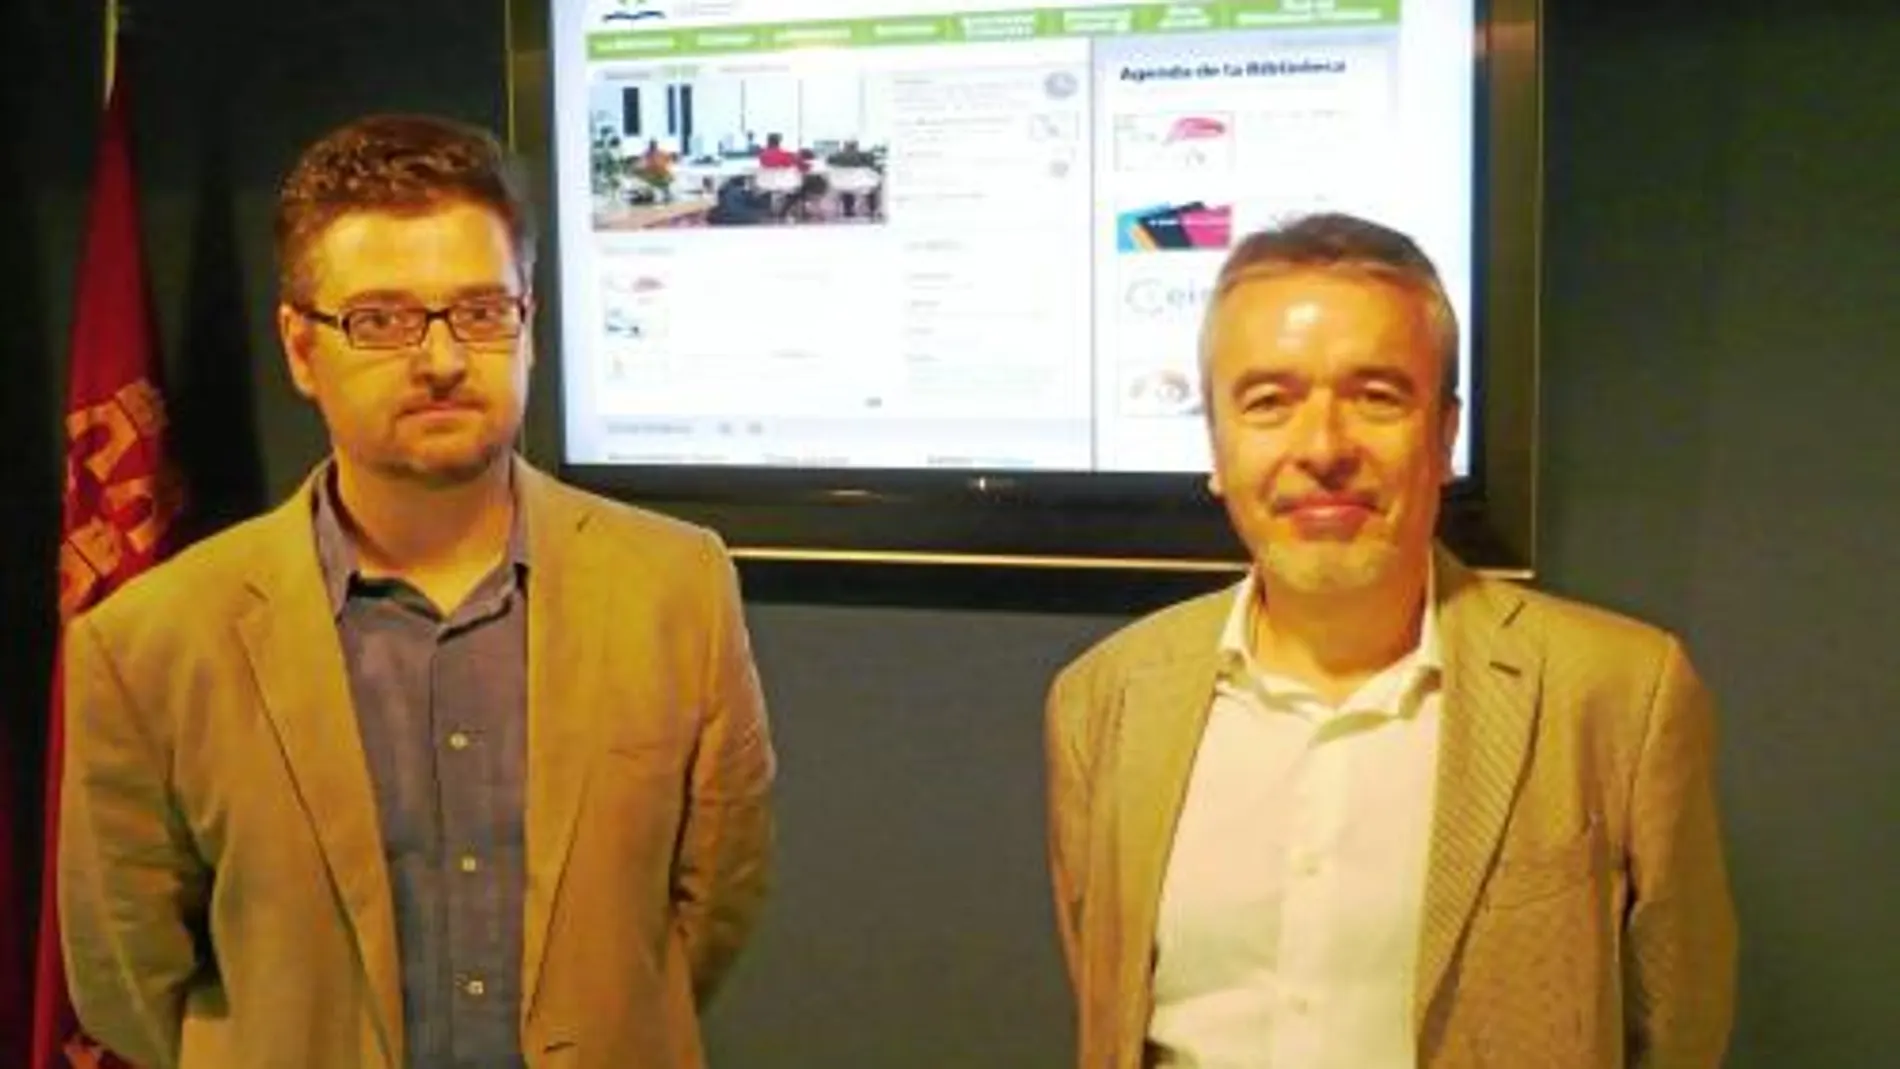 La Biblioteca Regional de Murcia moderniza su web